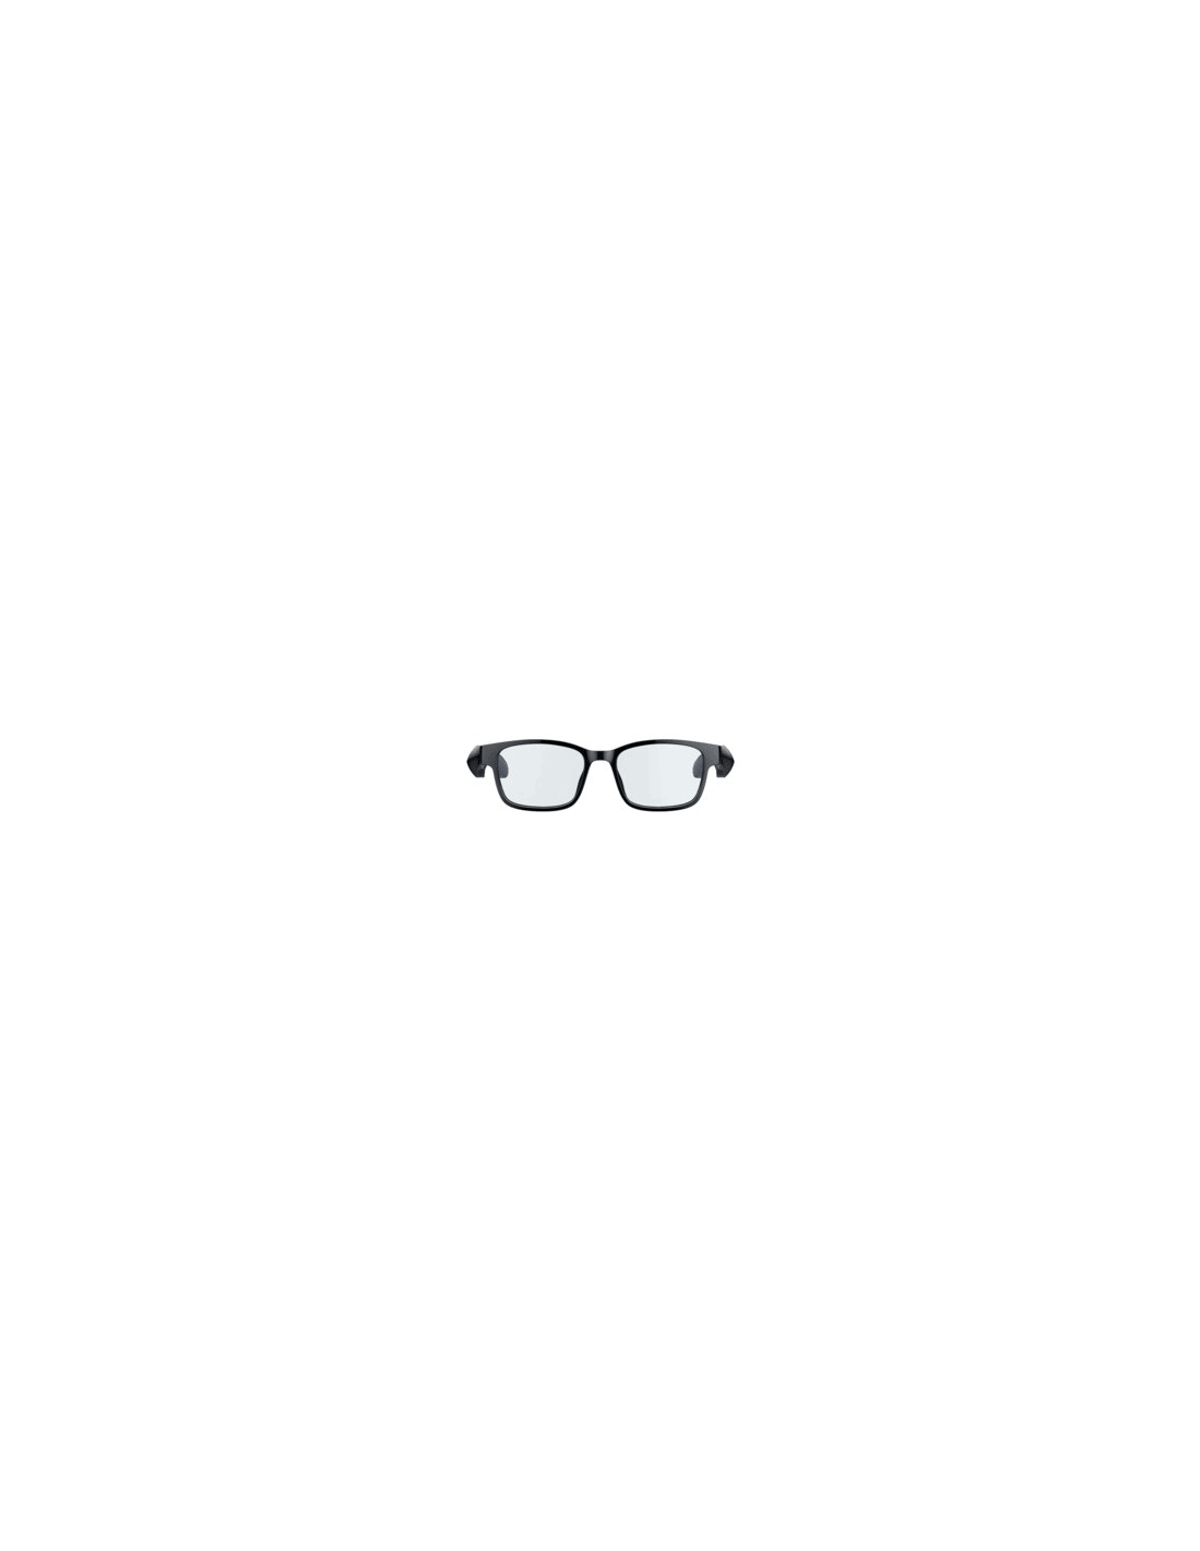 RAZER Anzu S M, Open-ear Bluetooth Glasses Smart schwarz